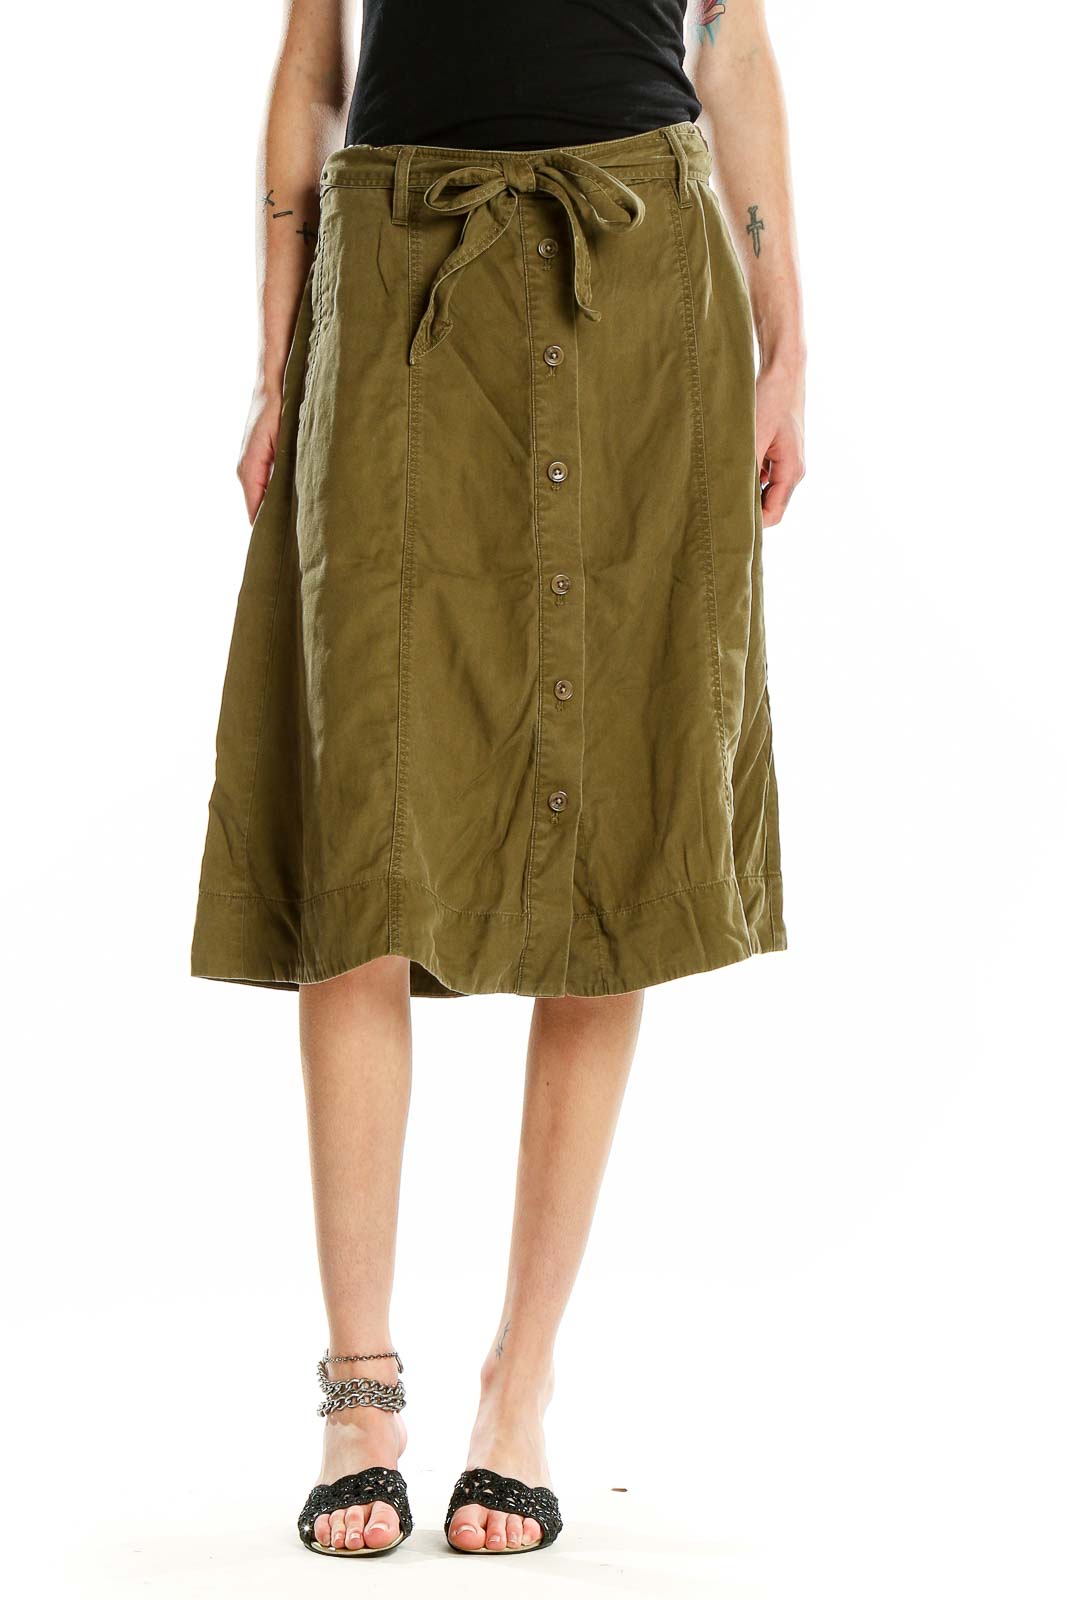 Green A-Line Skirt Front